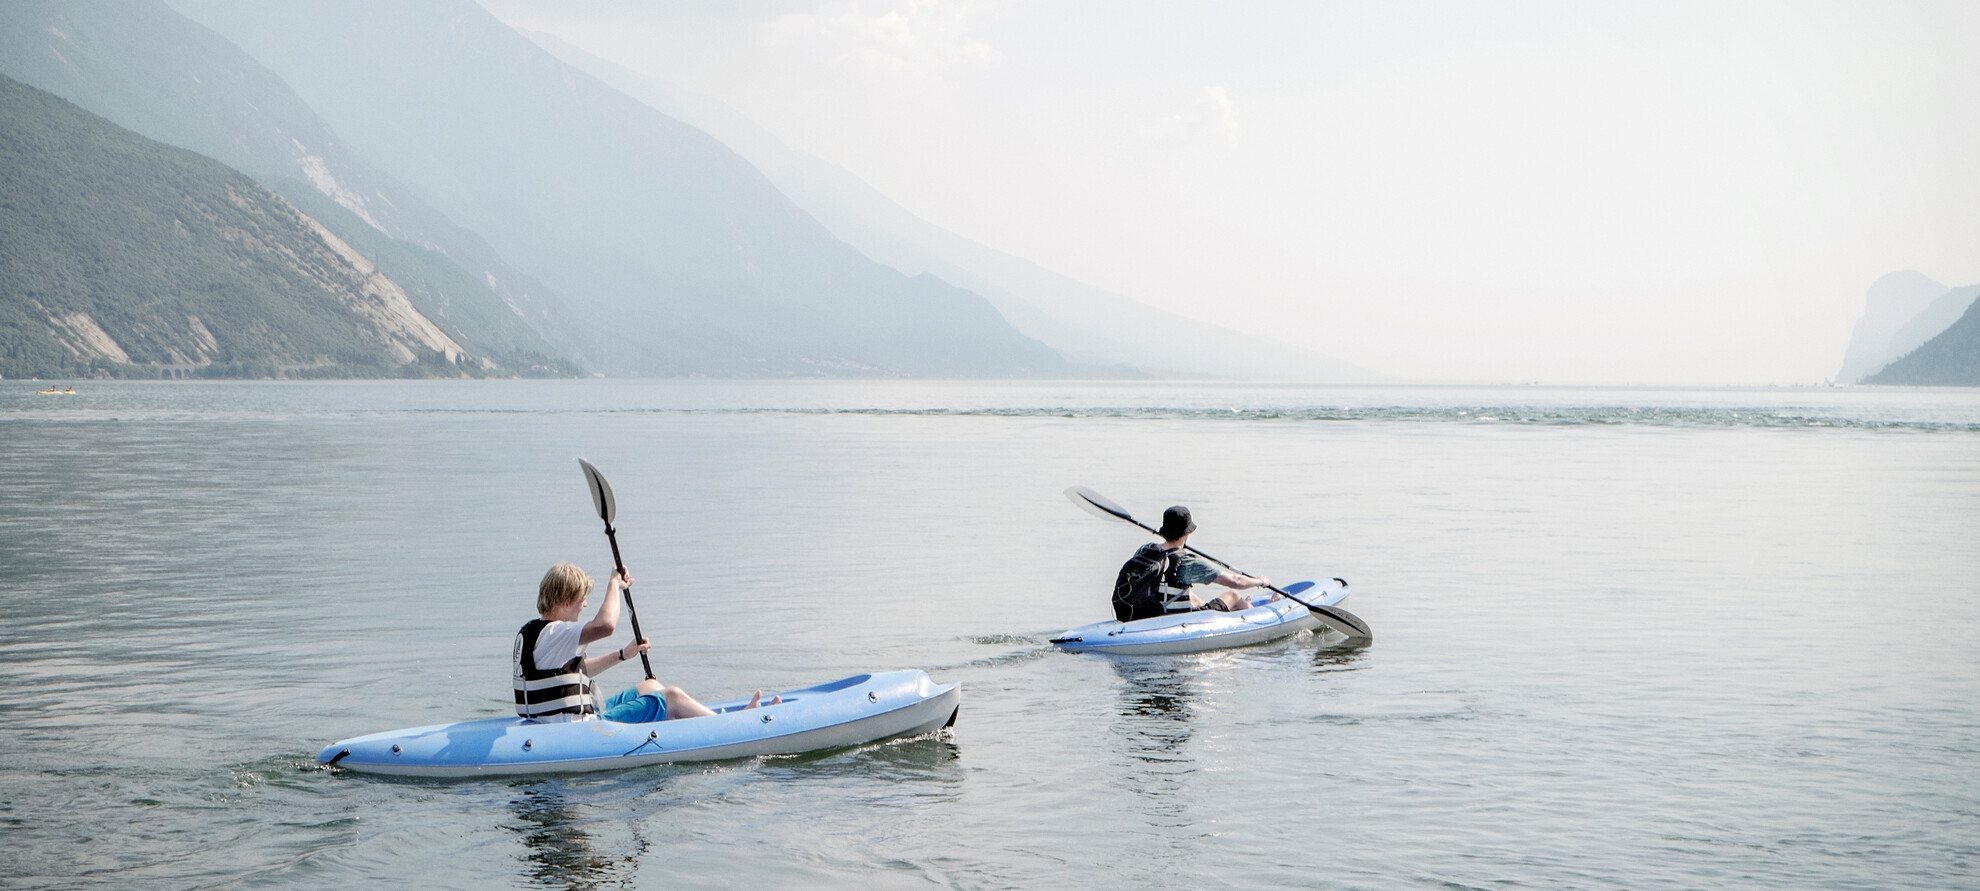 Garda Trentino - Lago di Garda - Coppia in Kayak
